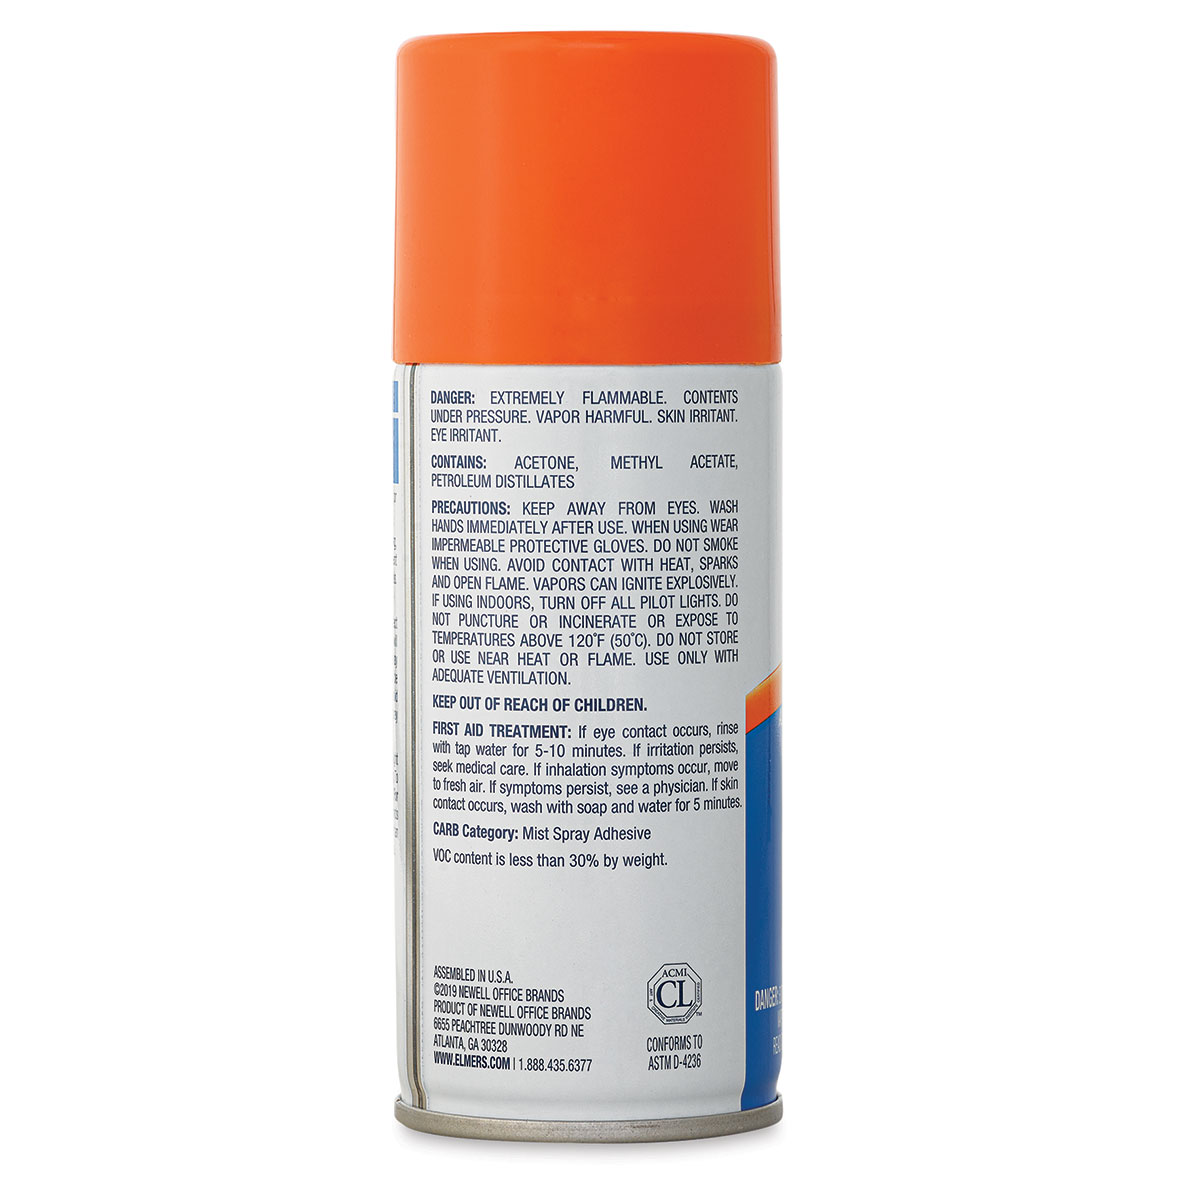 Elmers Spray Adhesive, 4 oz - 1 Pkg